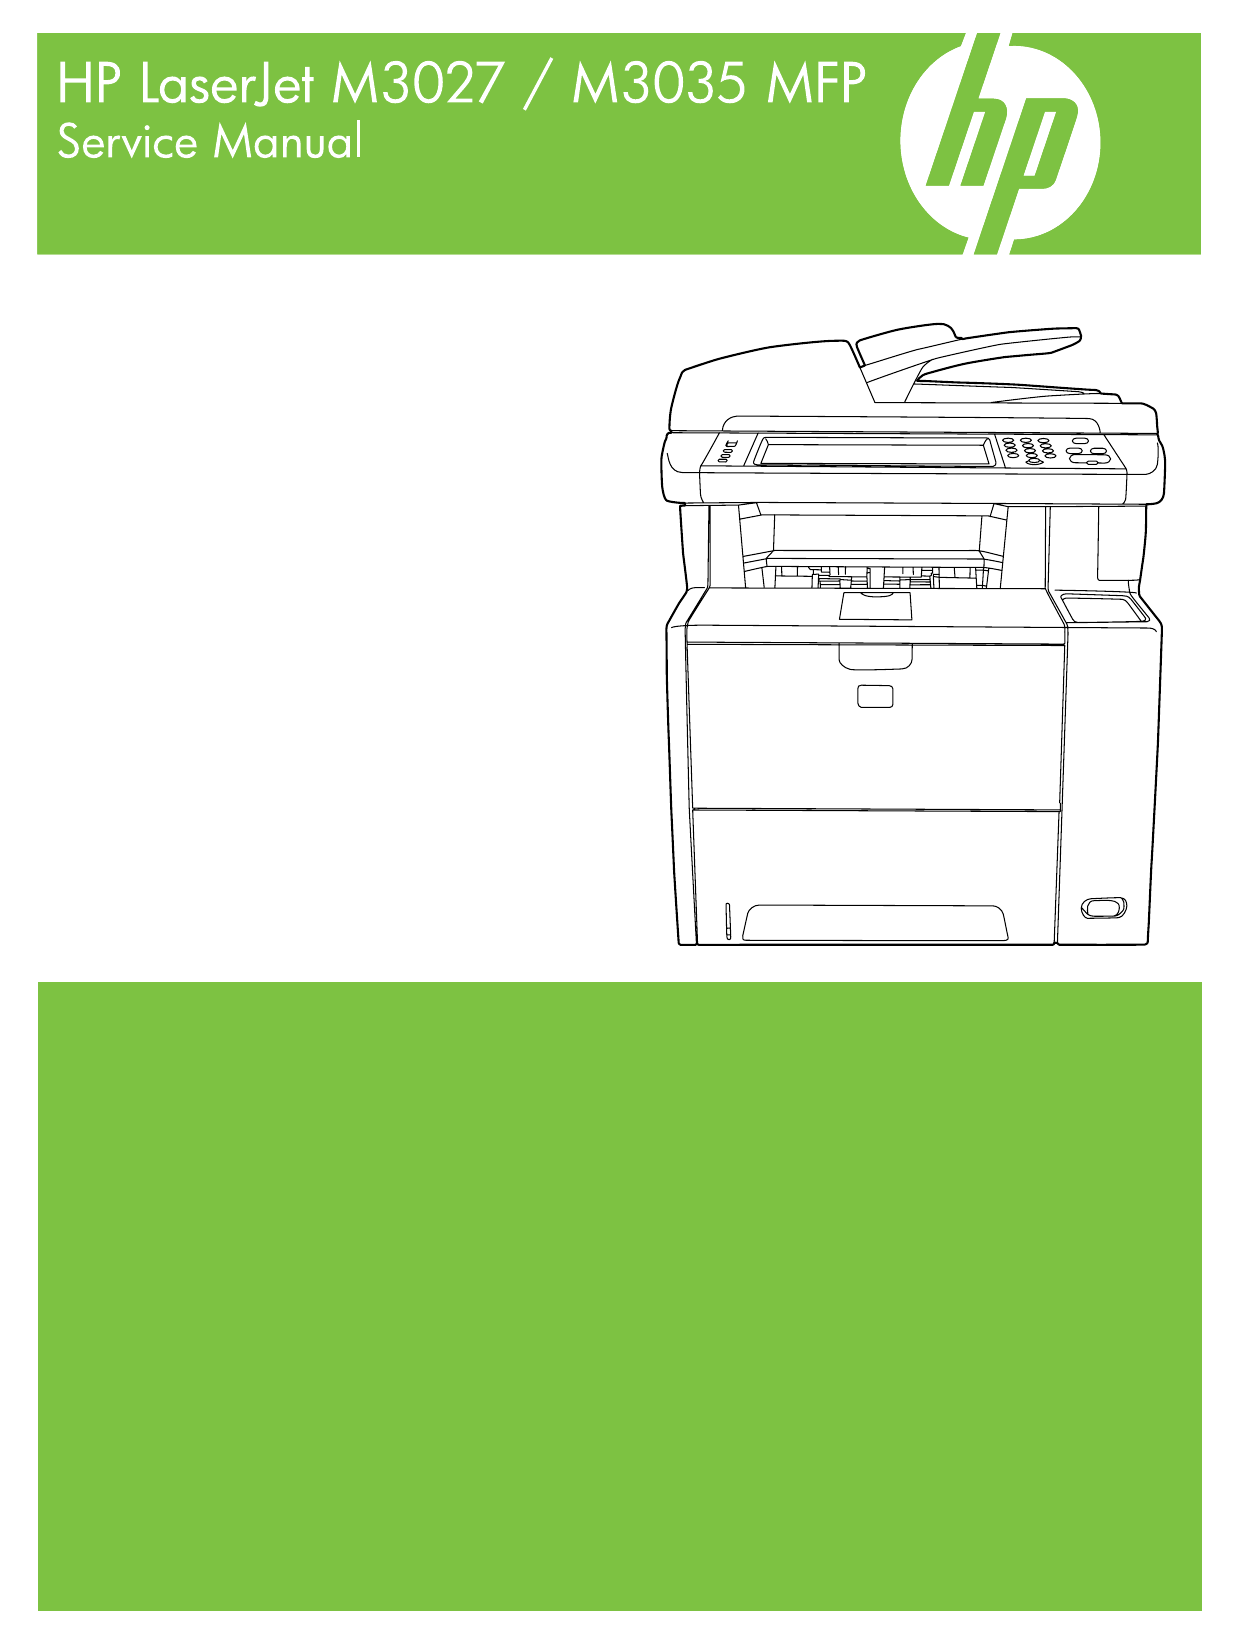 HP LaserJet M3027, M3035 multifunction printer service manual Preview image 1